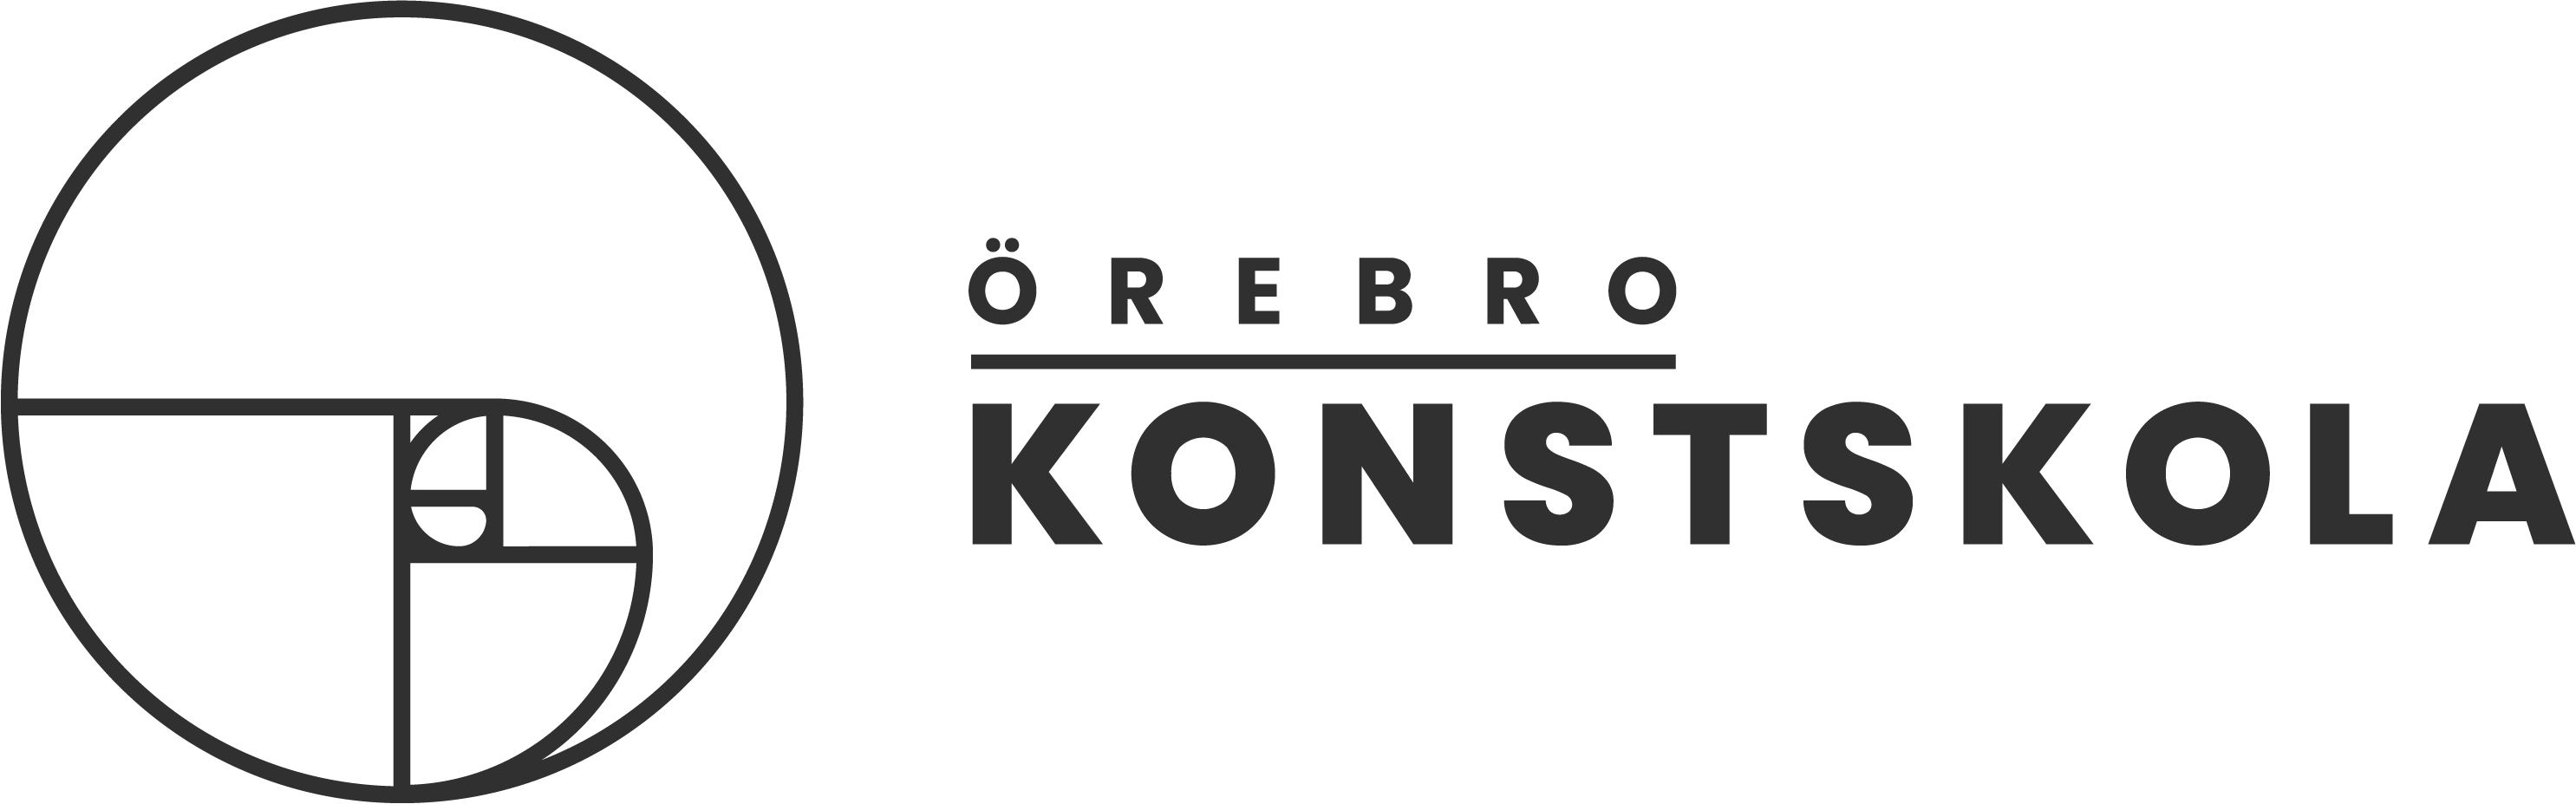 Örebro Konstskola